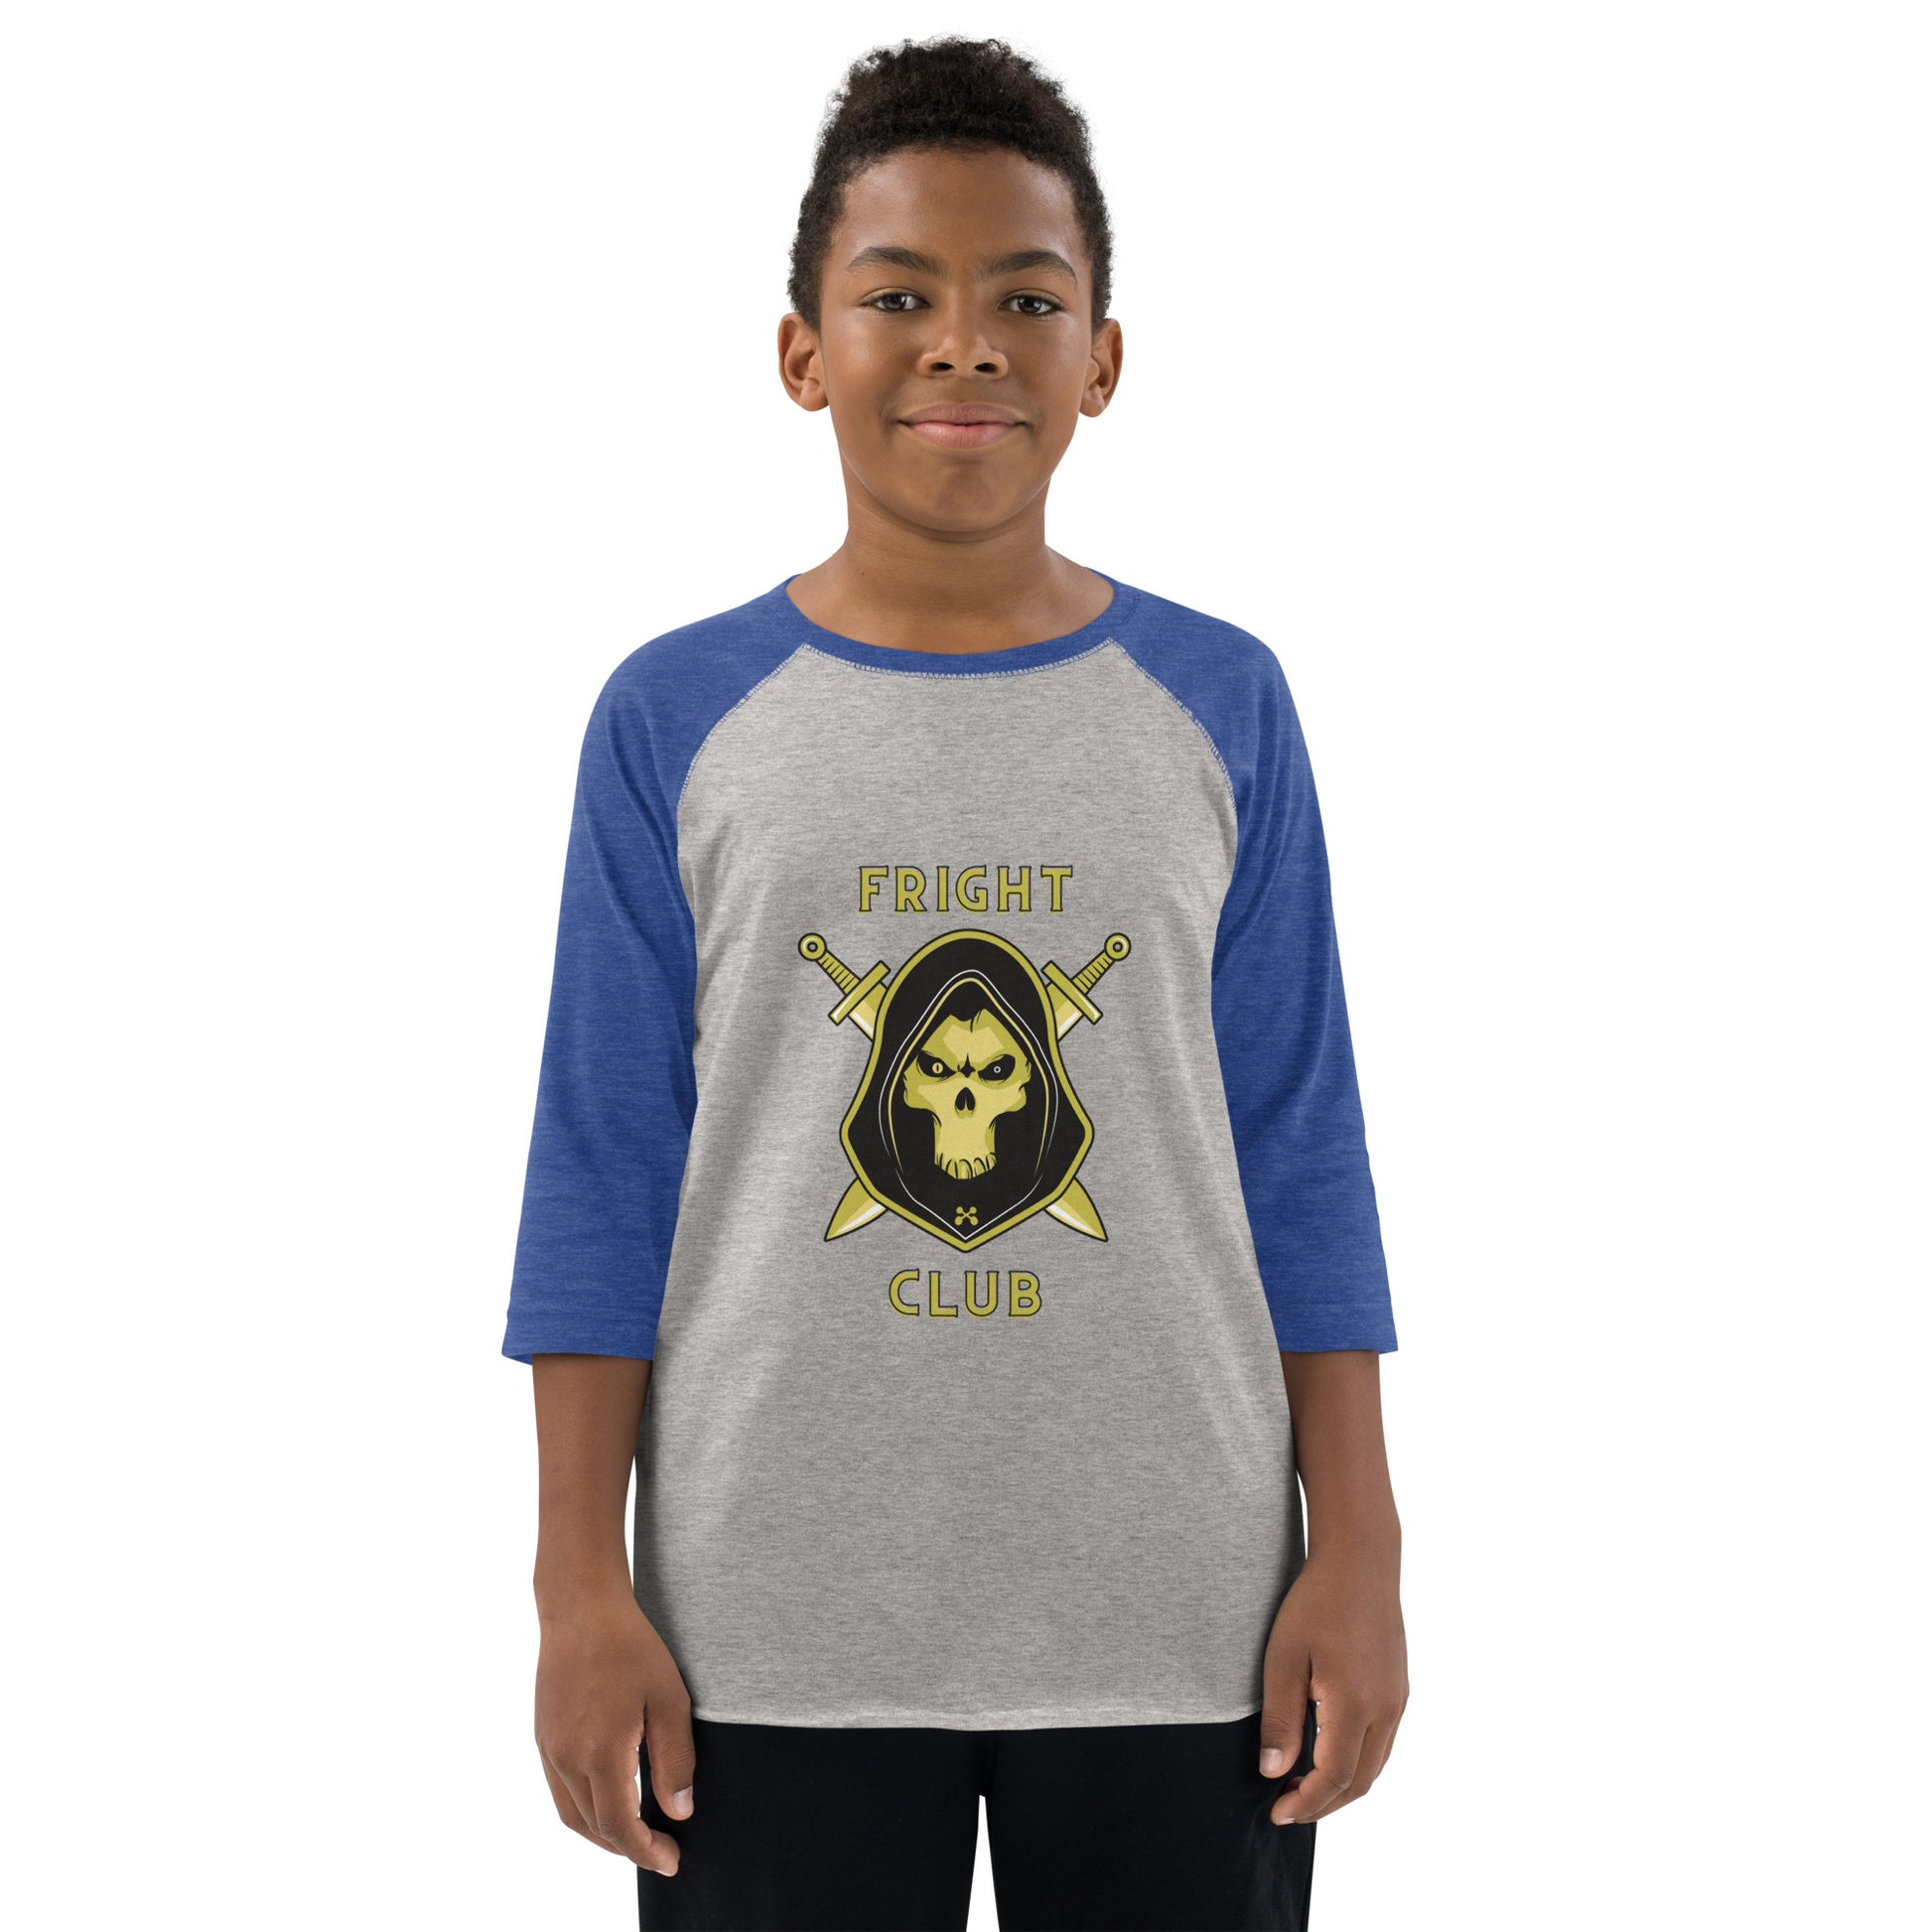 Fright Club Youth baseball shirt - A. Mandaline Art